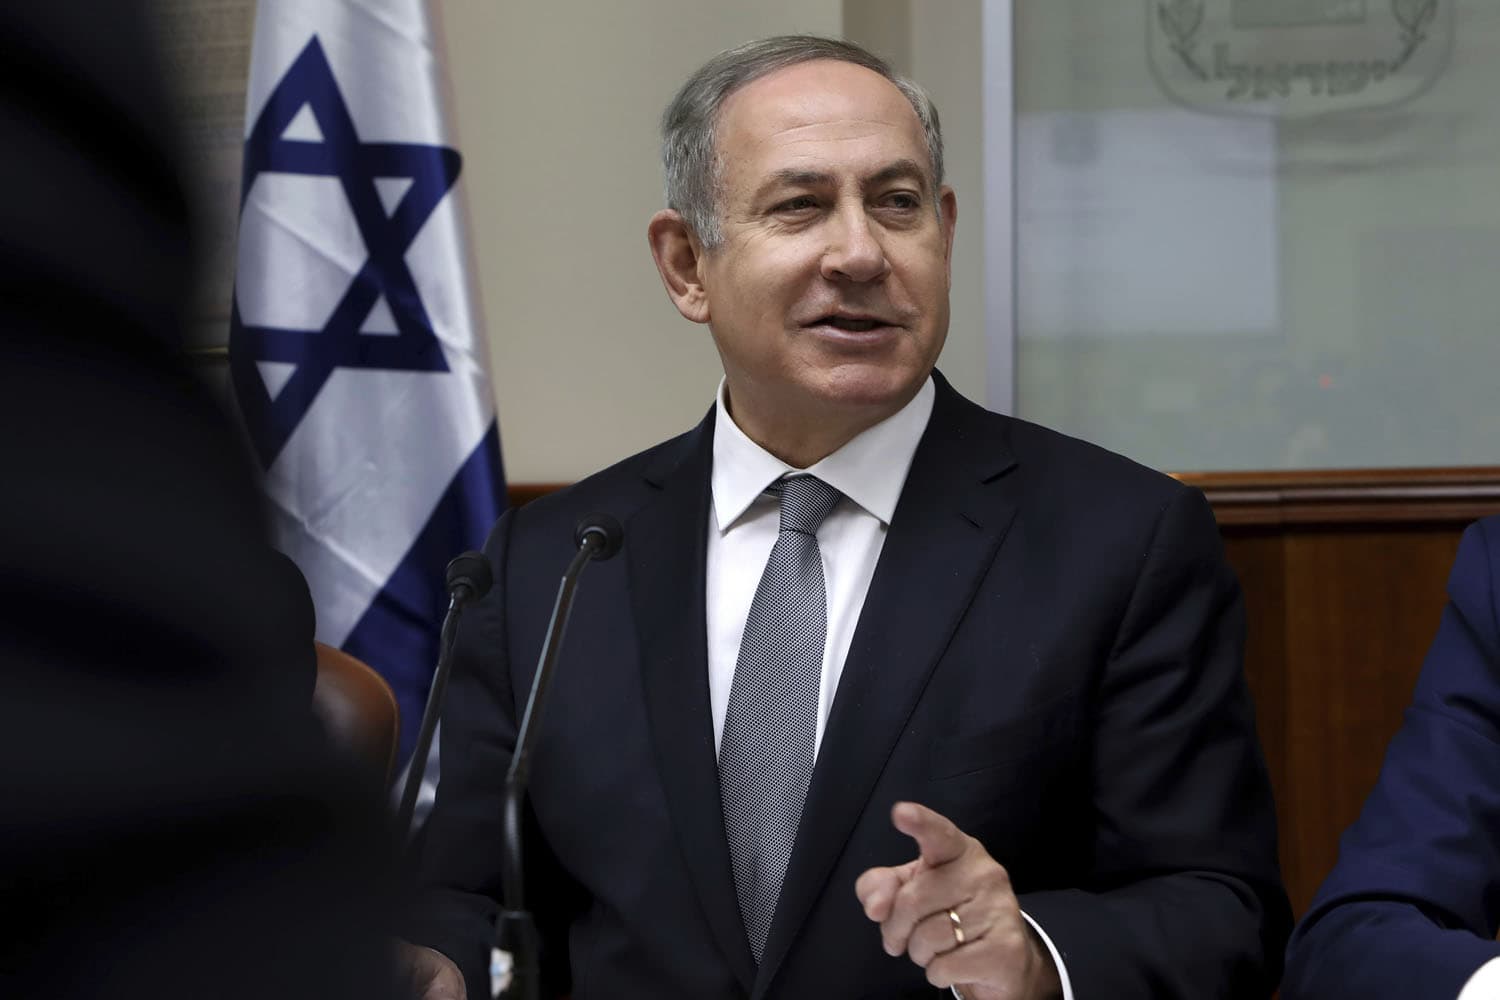 Israeli Prime Minister Benjamin Netanyahu chairs the weekly cabinet meeting in Jerusalem. (Gali Tibbon/AP)